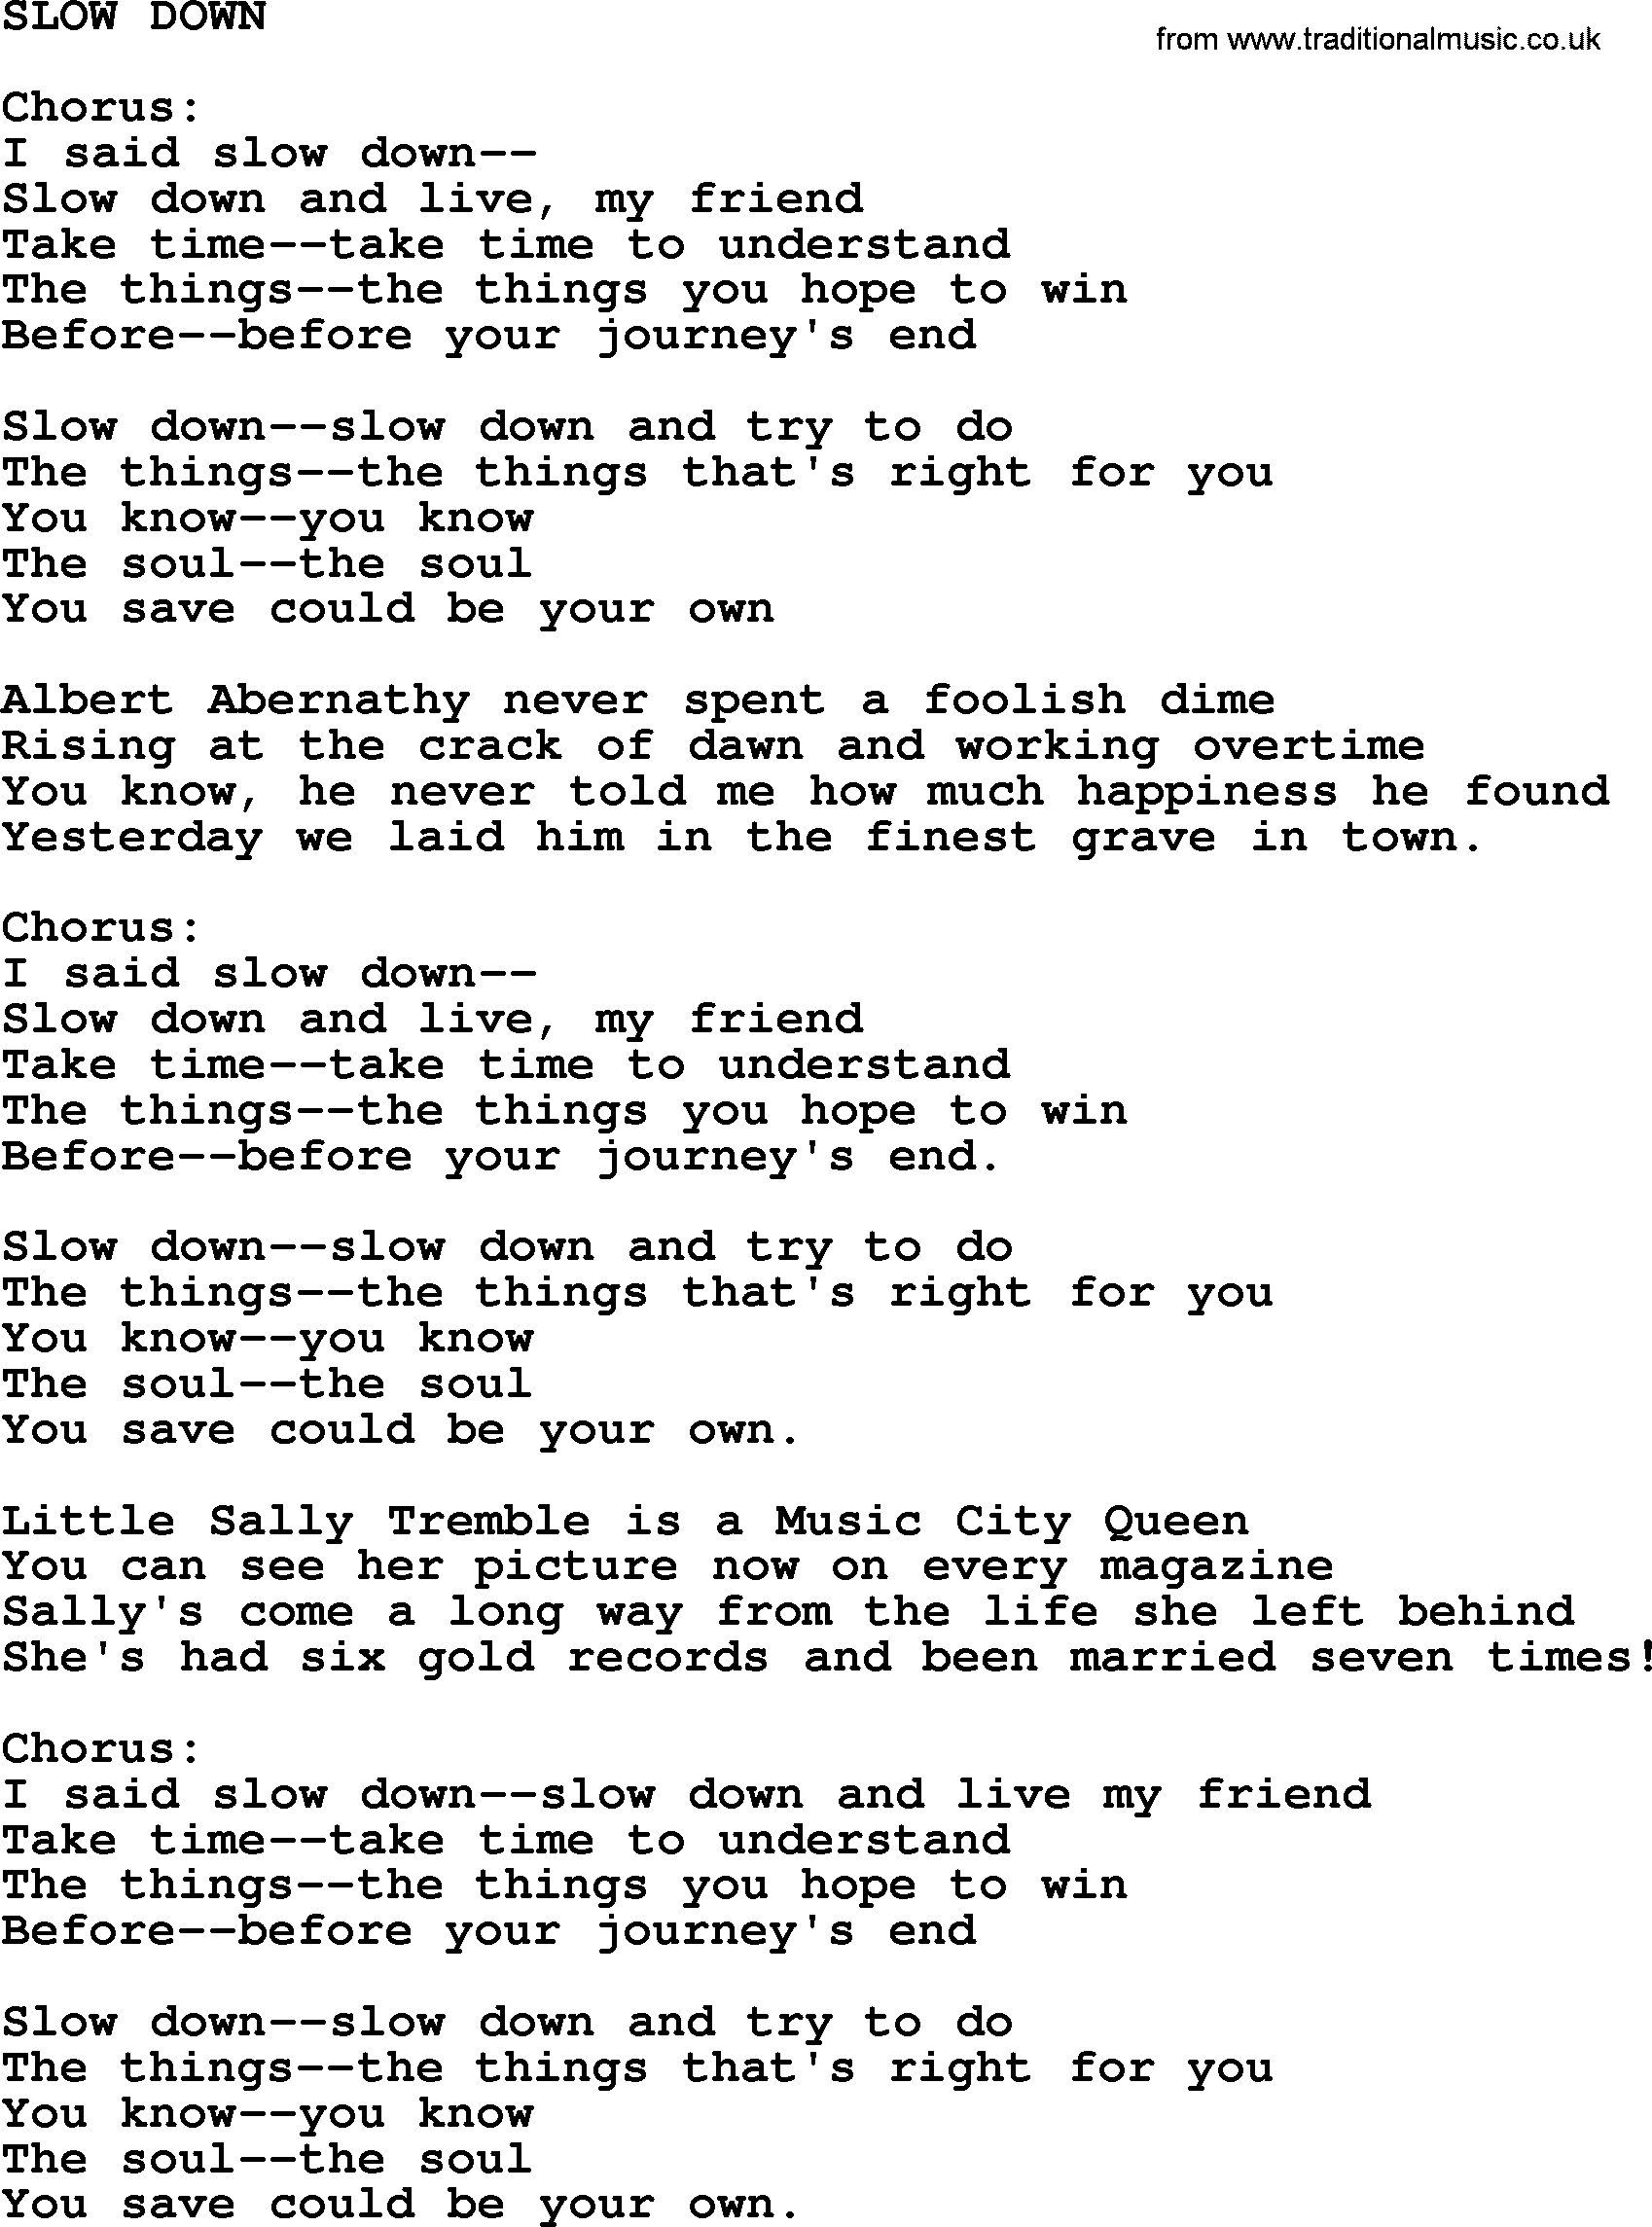 Kris Kristofferson song: Slow Down lyrics